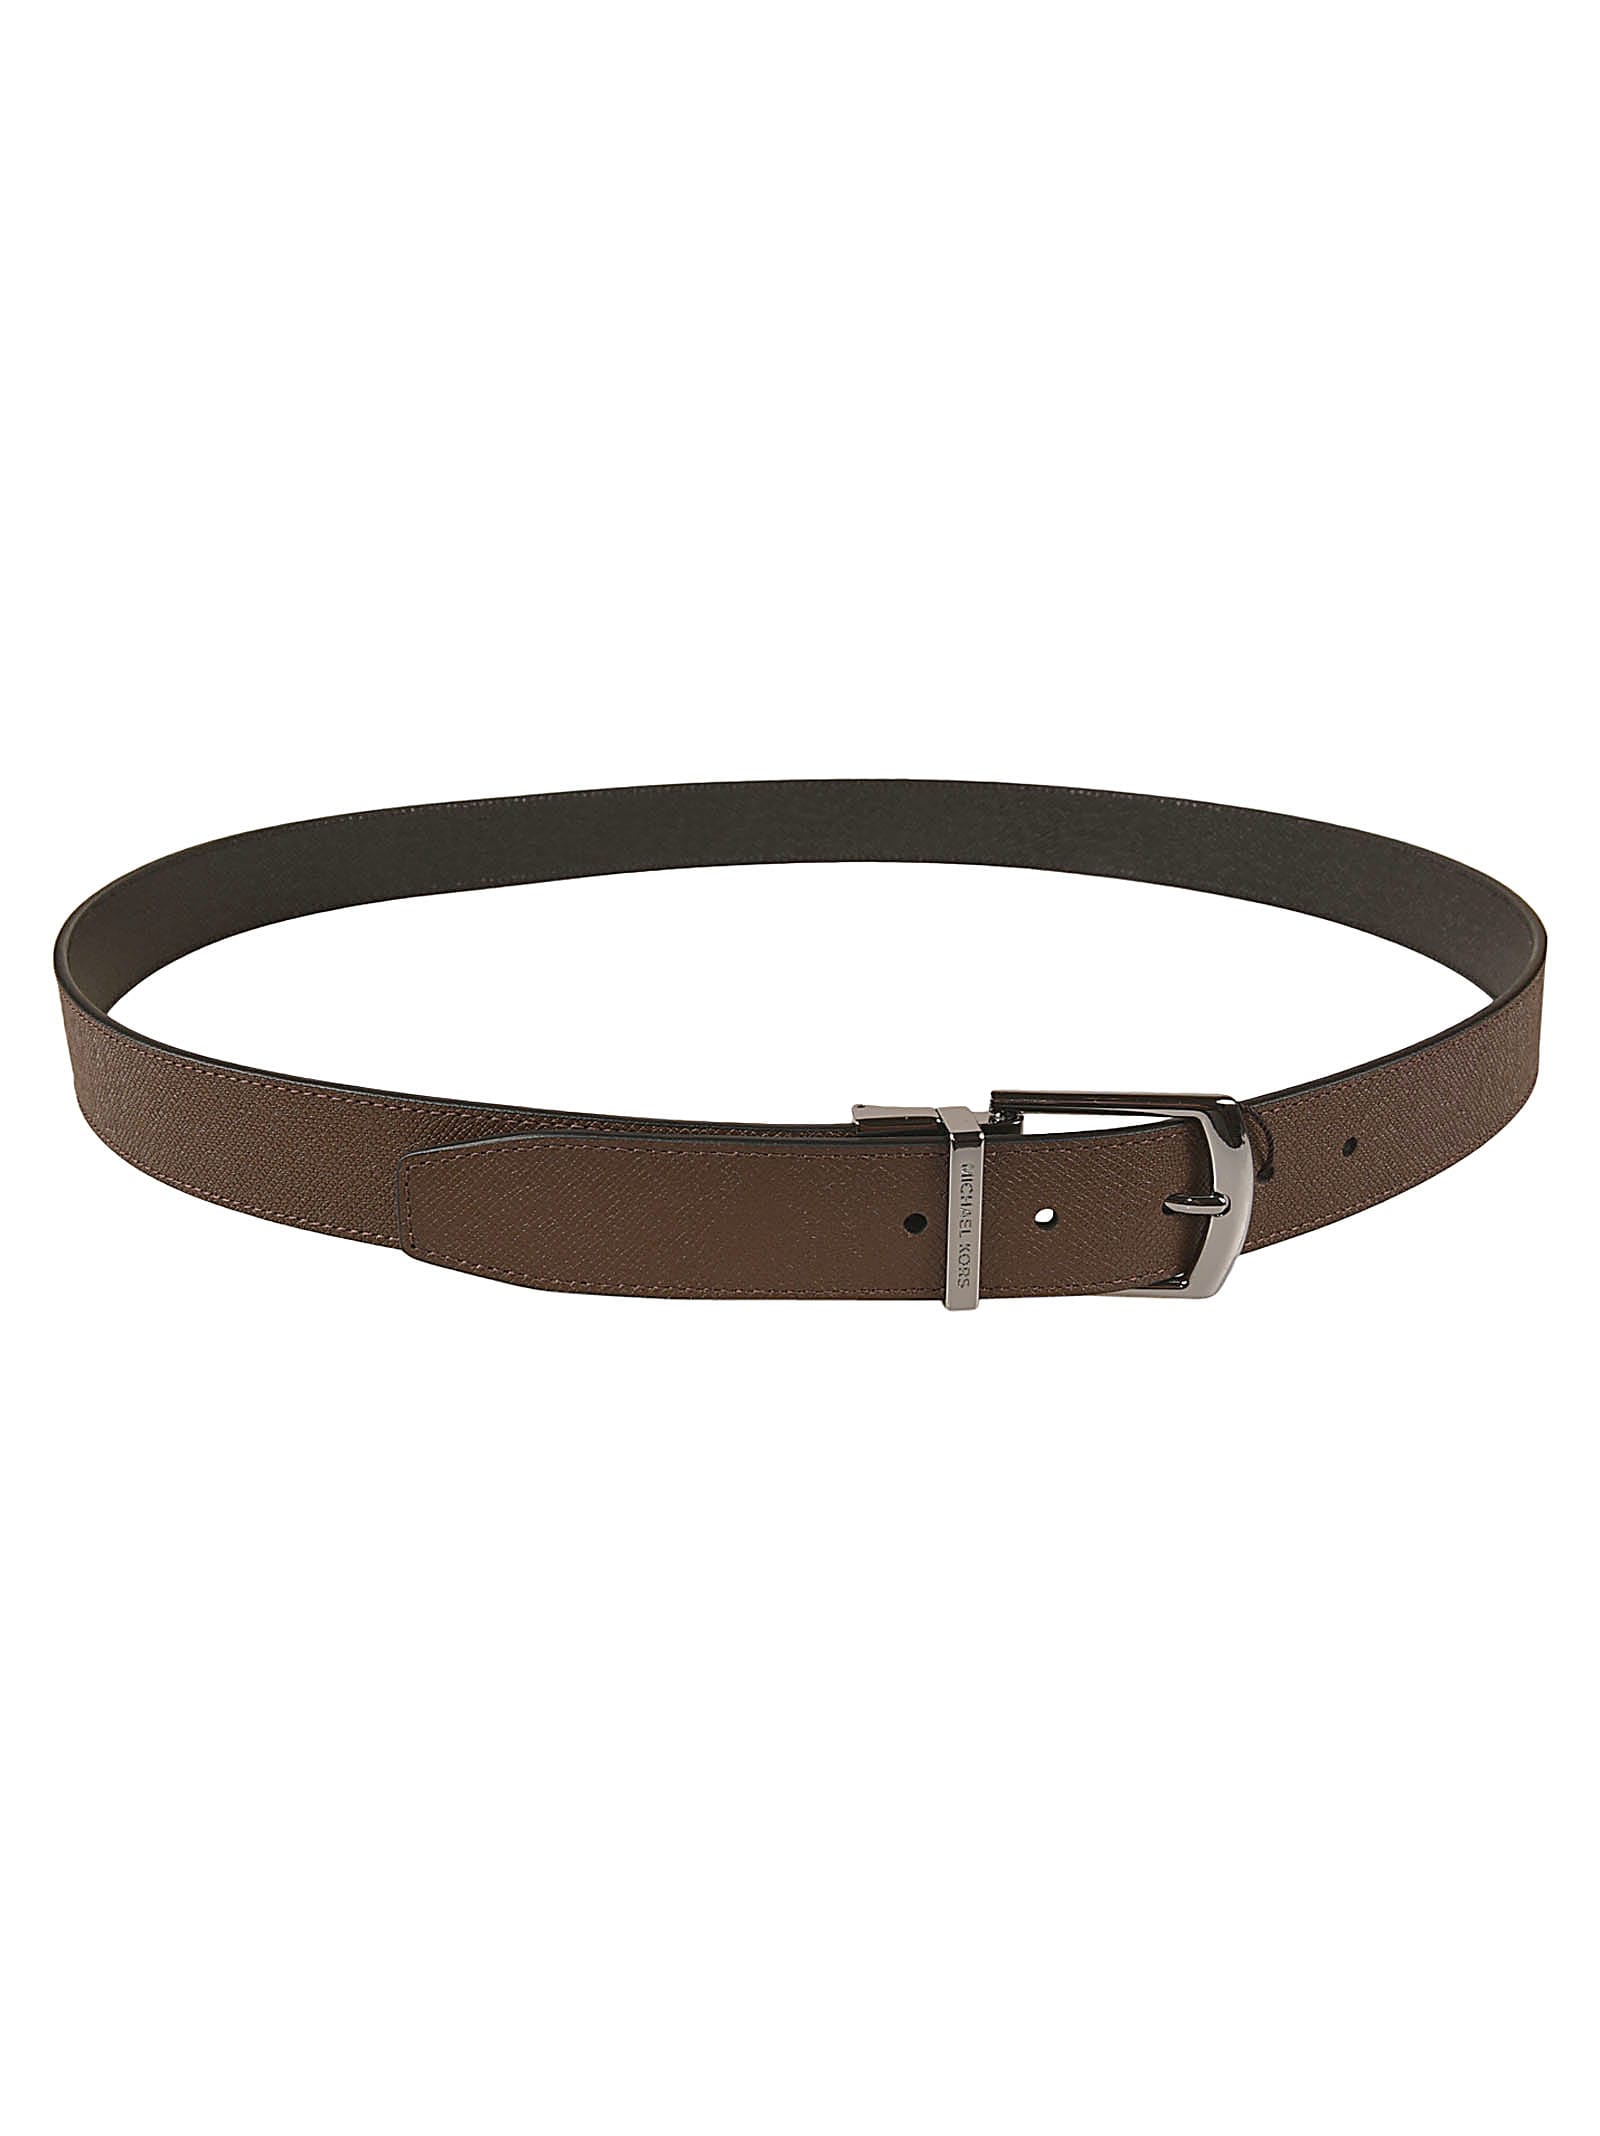 Michael Kors Grained Leather Belt